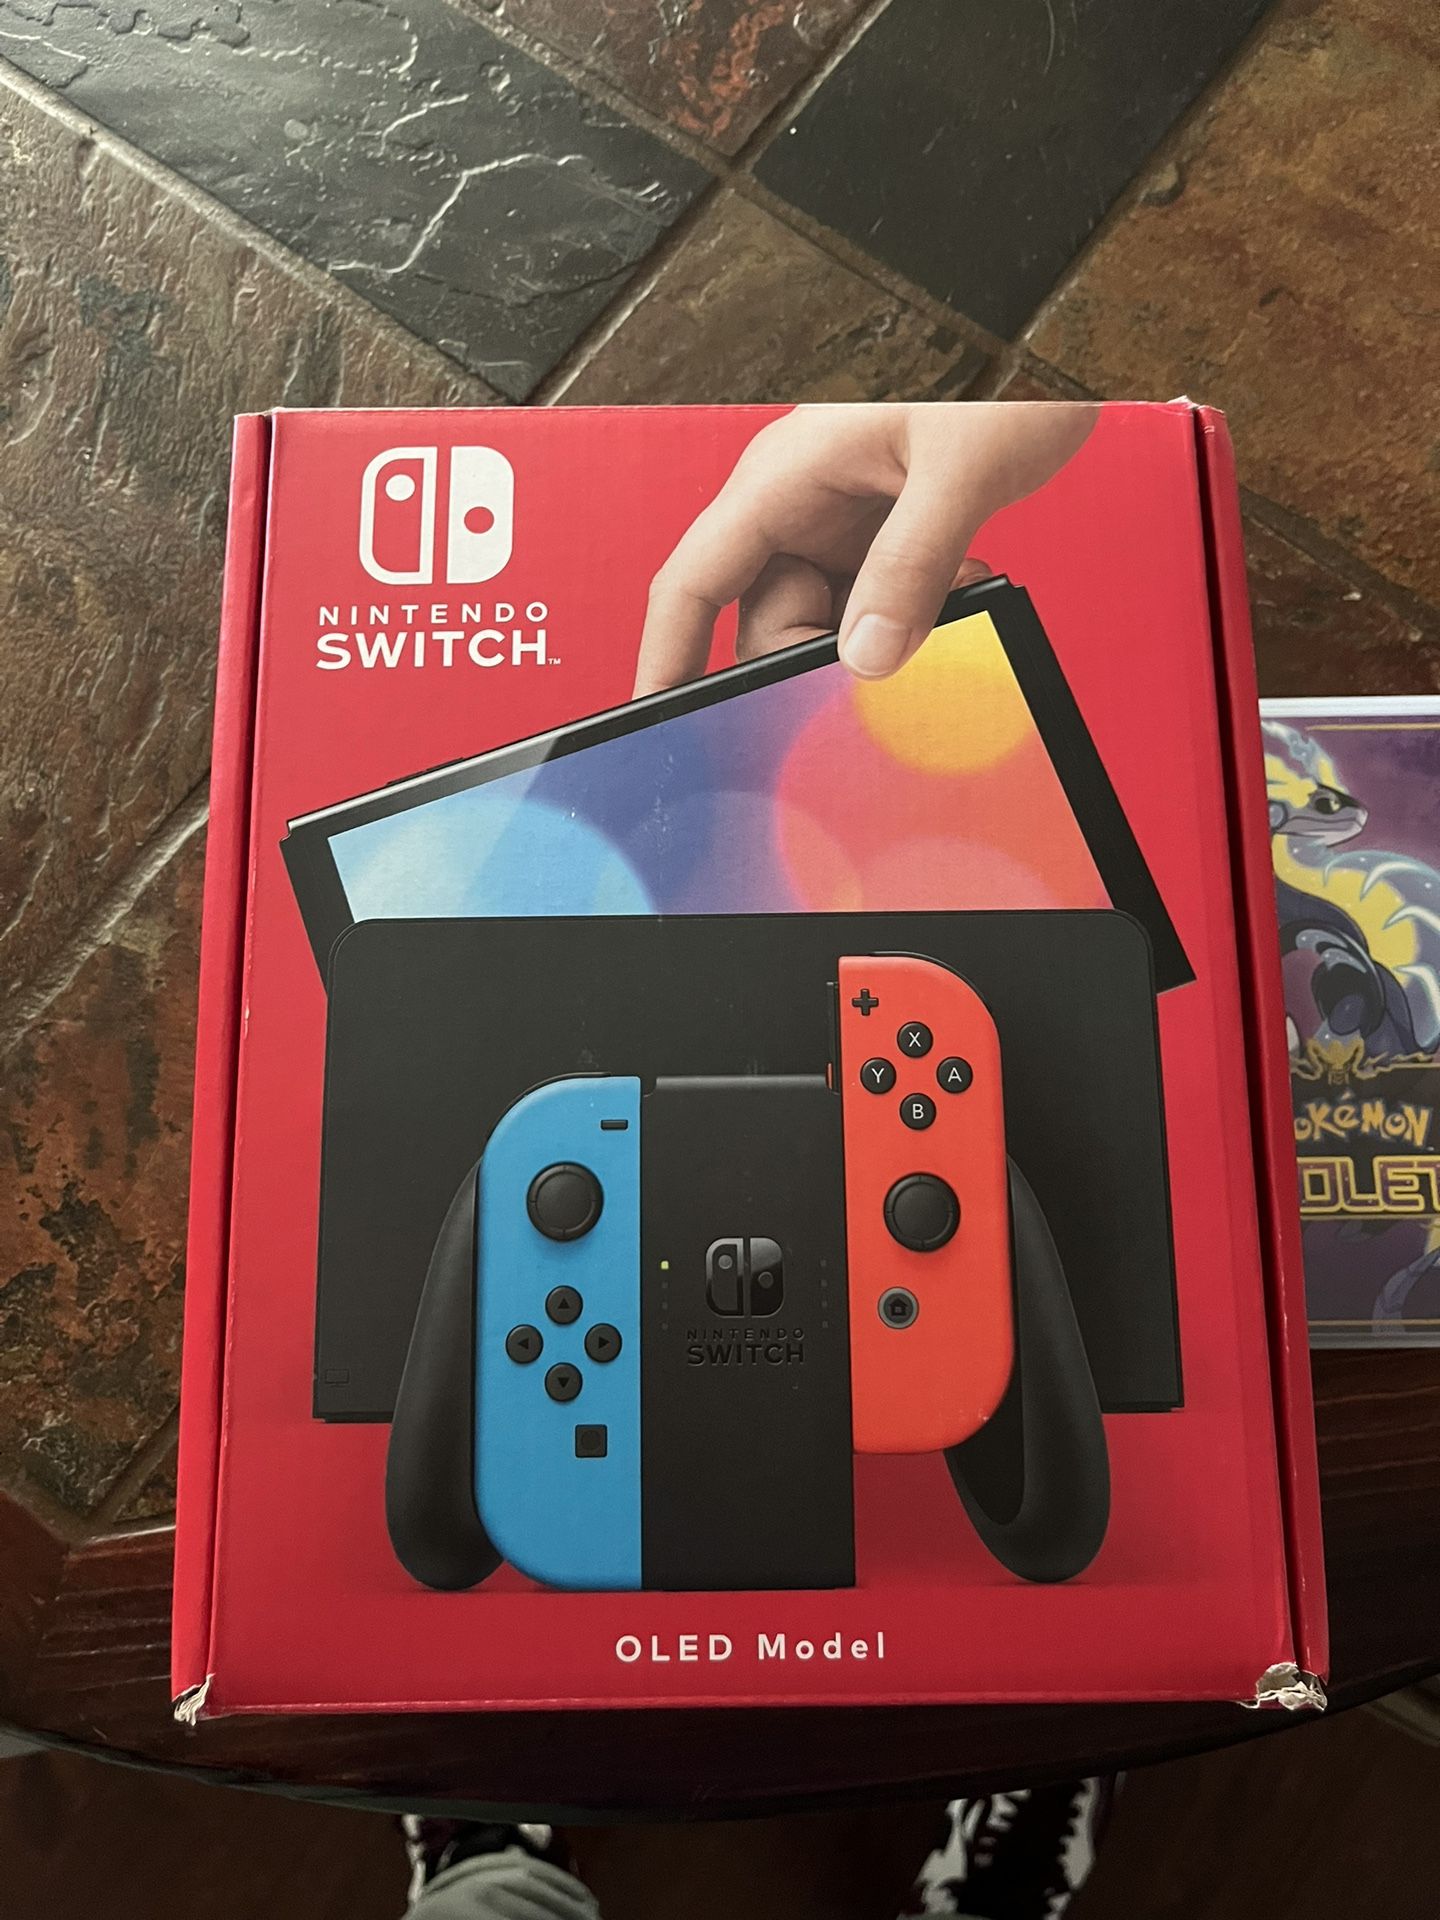 The Nintendo Switch Oled